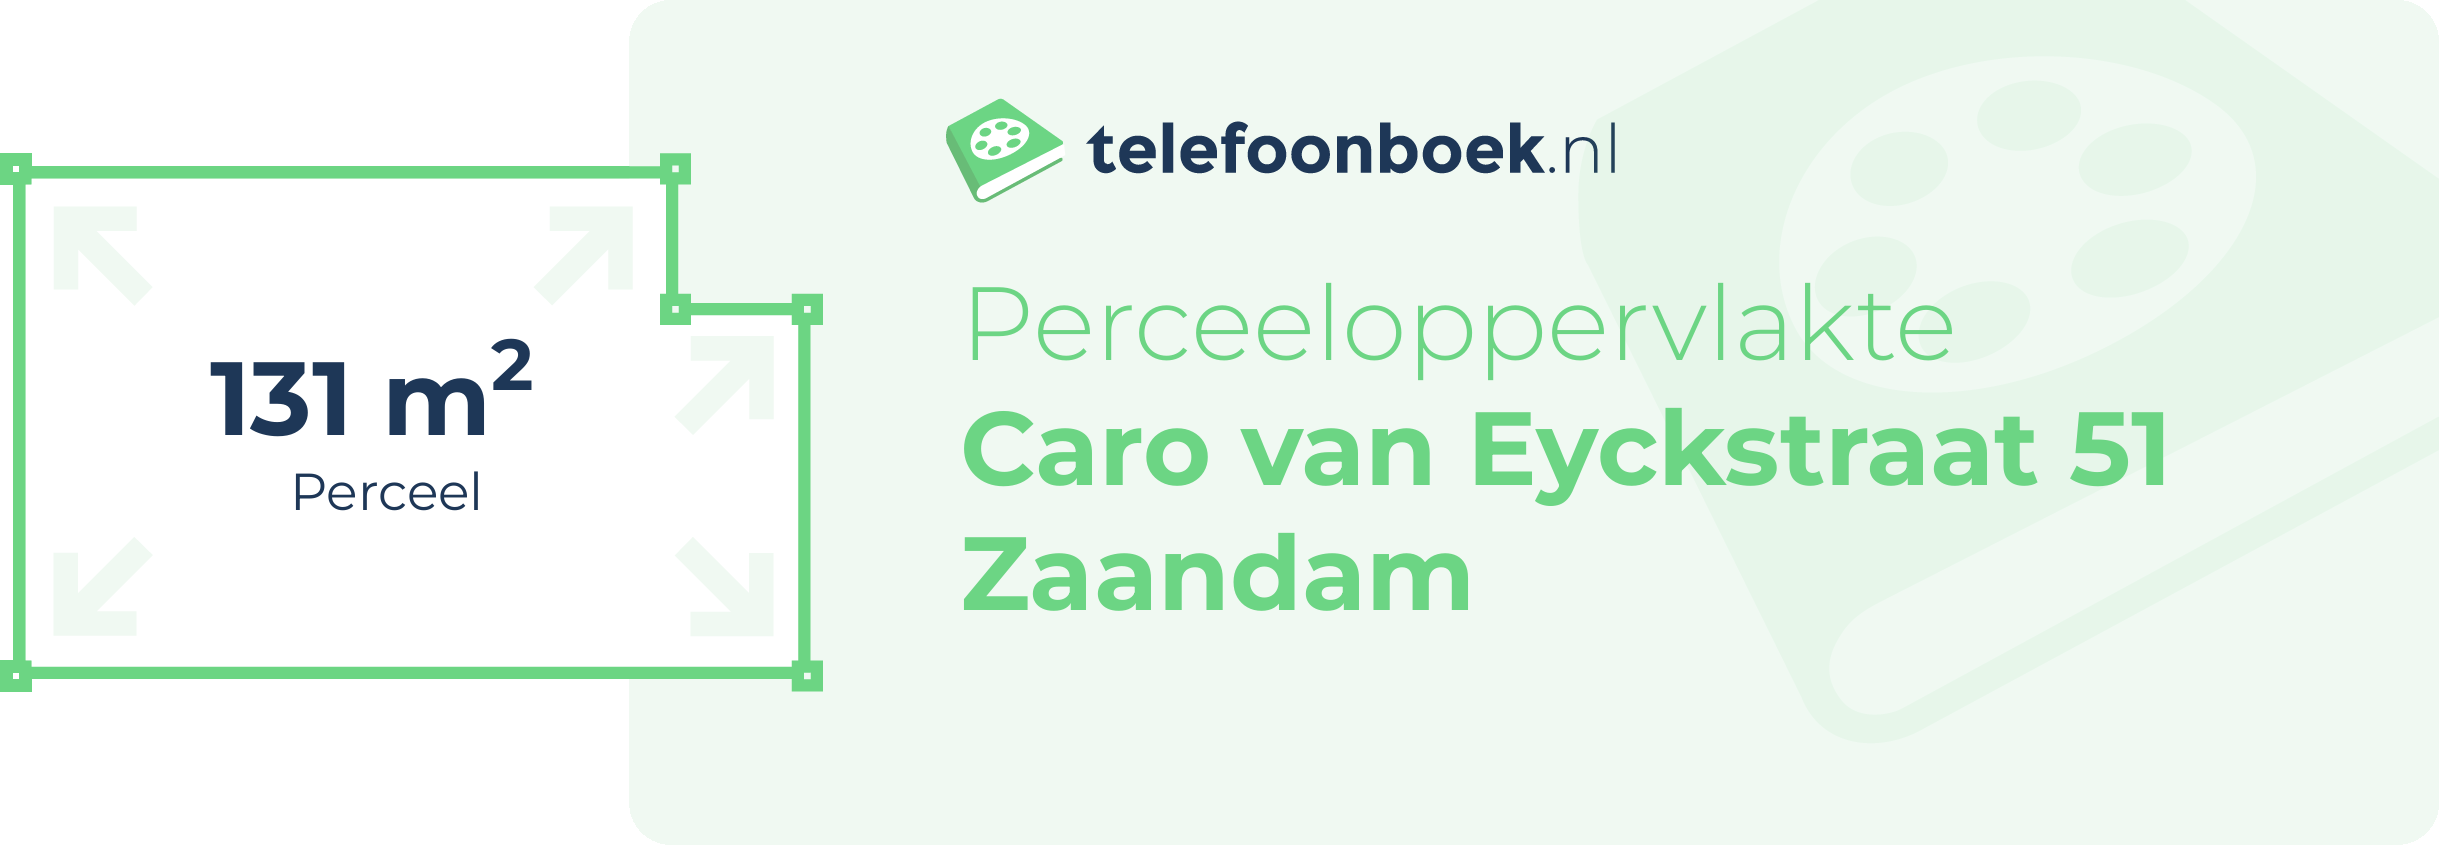 Perceeloppervlakte Caro Van Eyckstraat 51 Zaandam